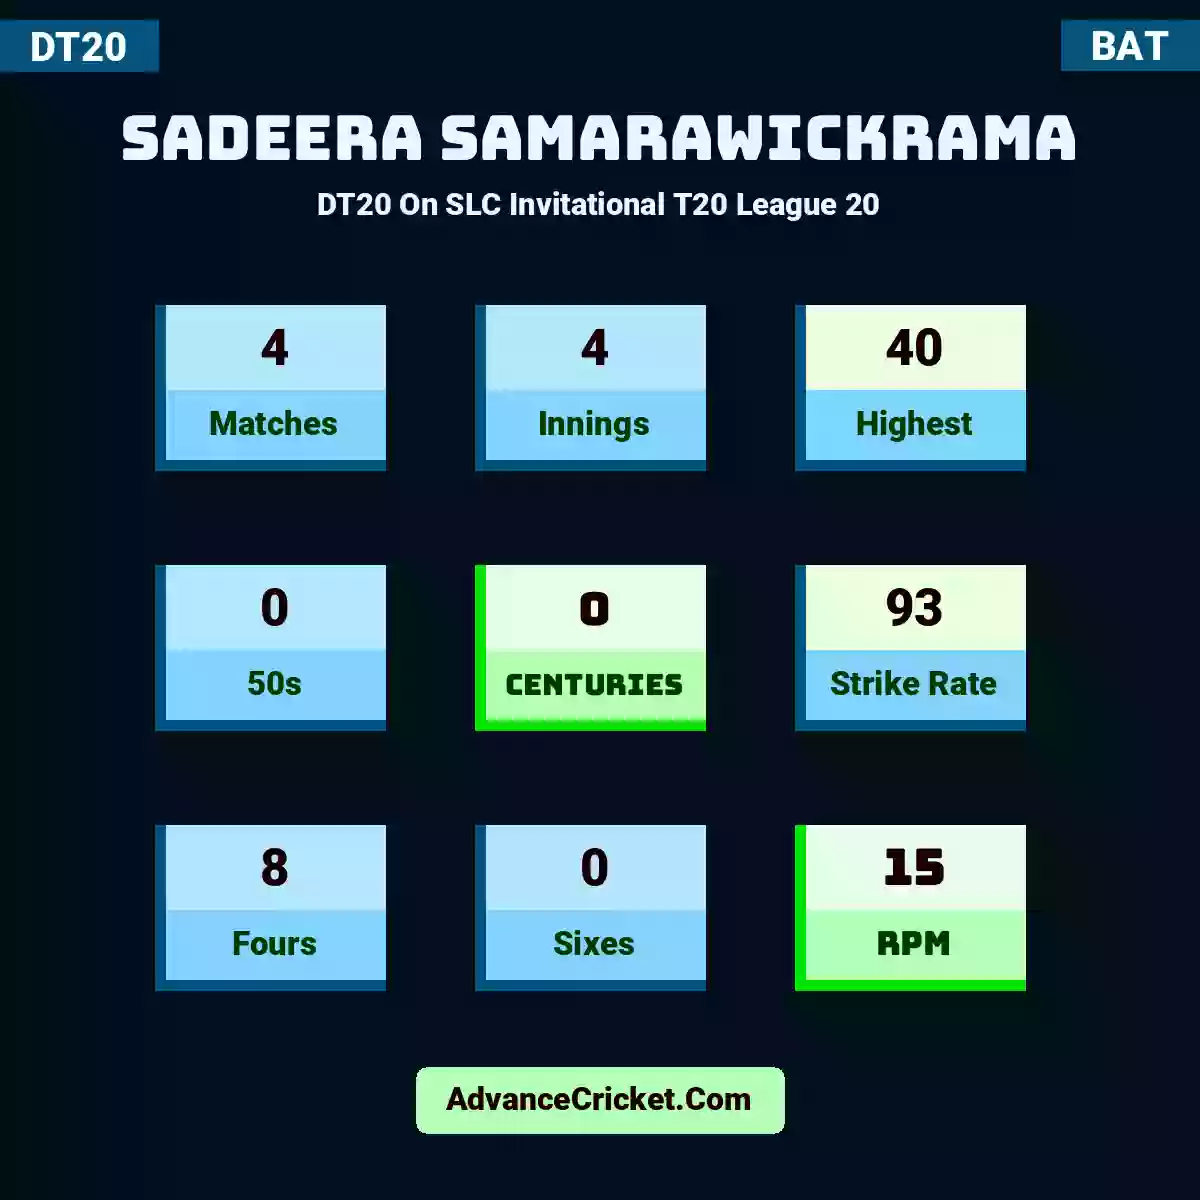 Sadeera Samarawickrama DT20  On SLC Invitational T20 League 20, Sadeera Samarawickrama played 4 matches, scored 40 runs as highest, 0 half-centuries, and 0 centuries, with a strike rate of 93. S.Samarawickrama hit 8 fours and 0 sixes, with an RPM of 15.